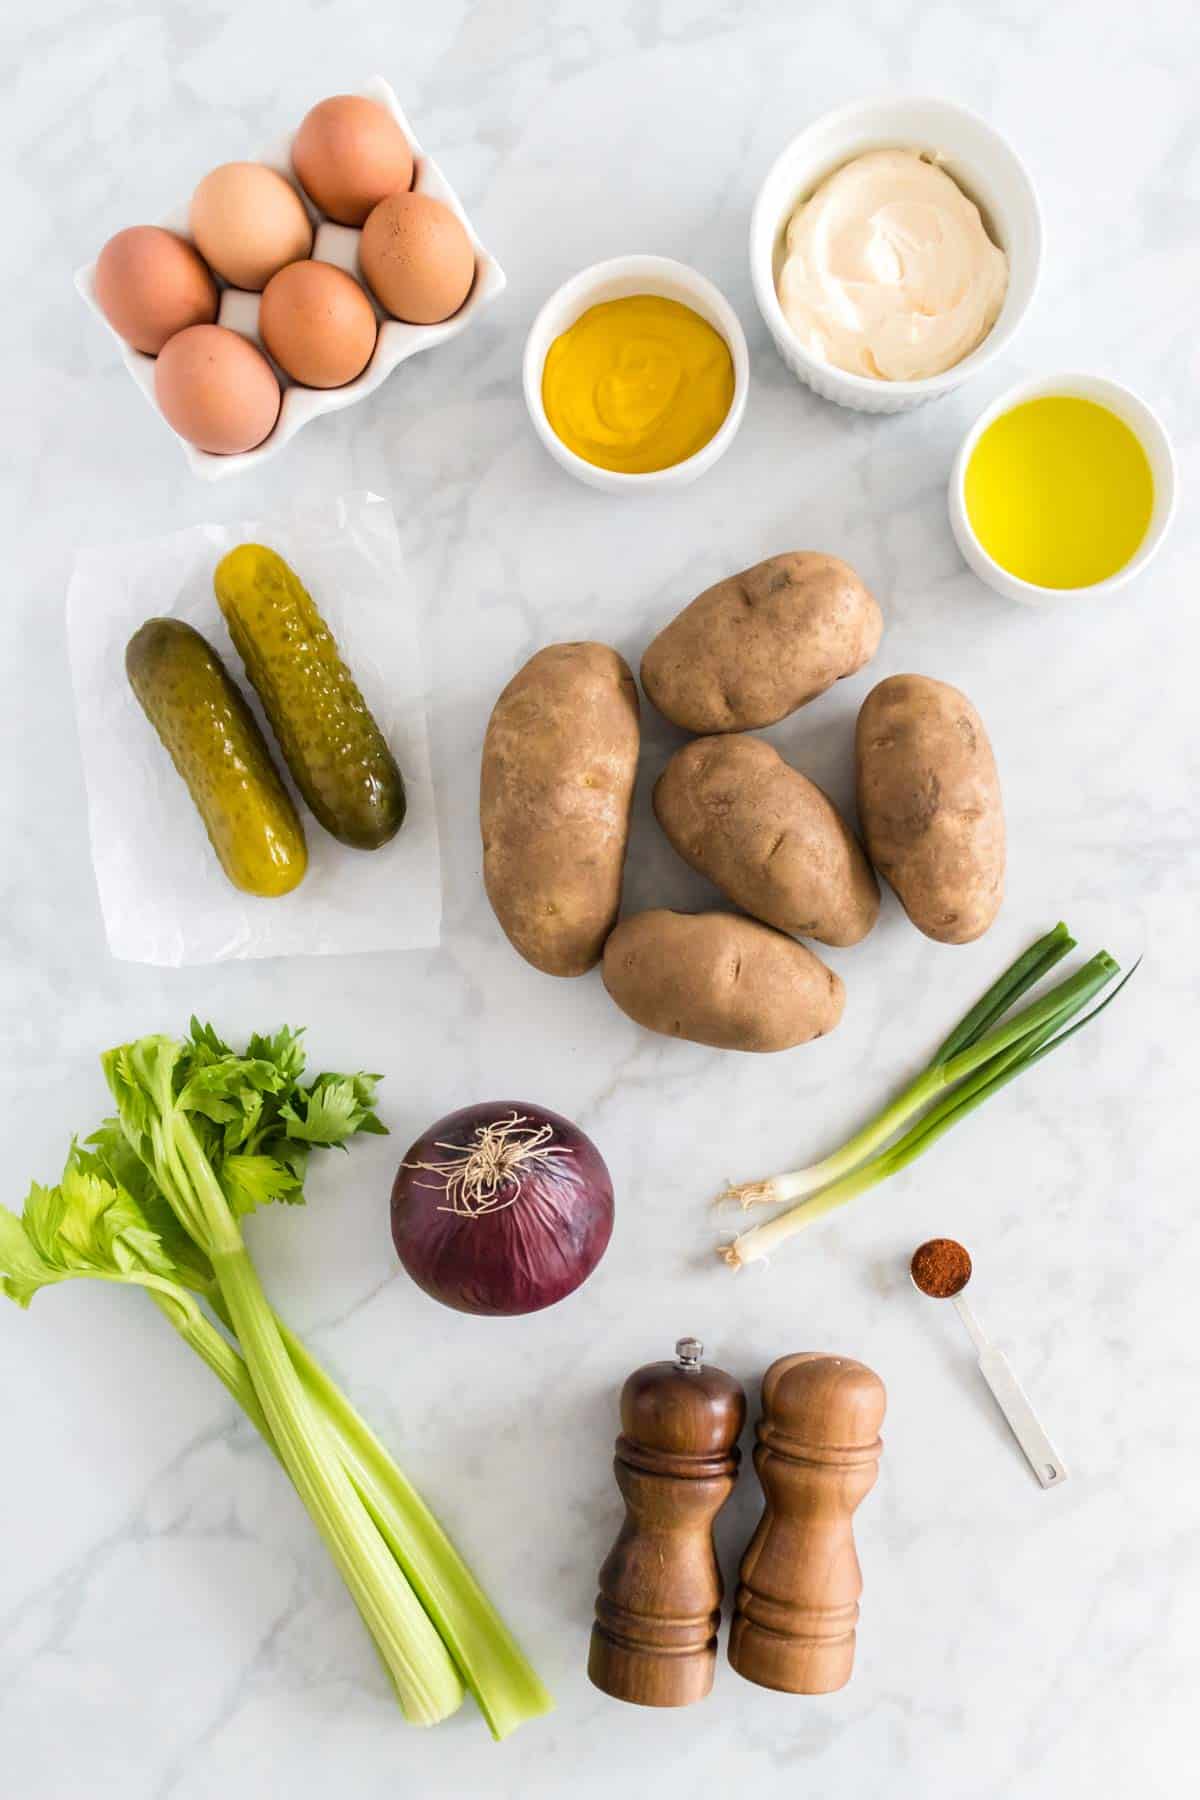 potato salad ingredient on counter before preparing